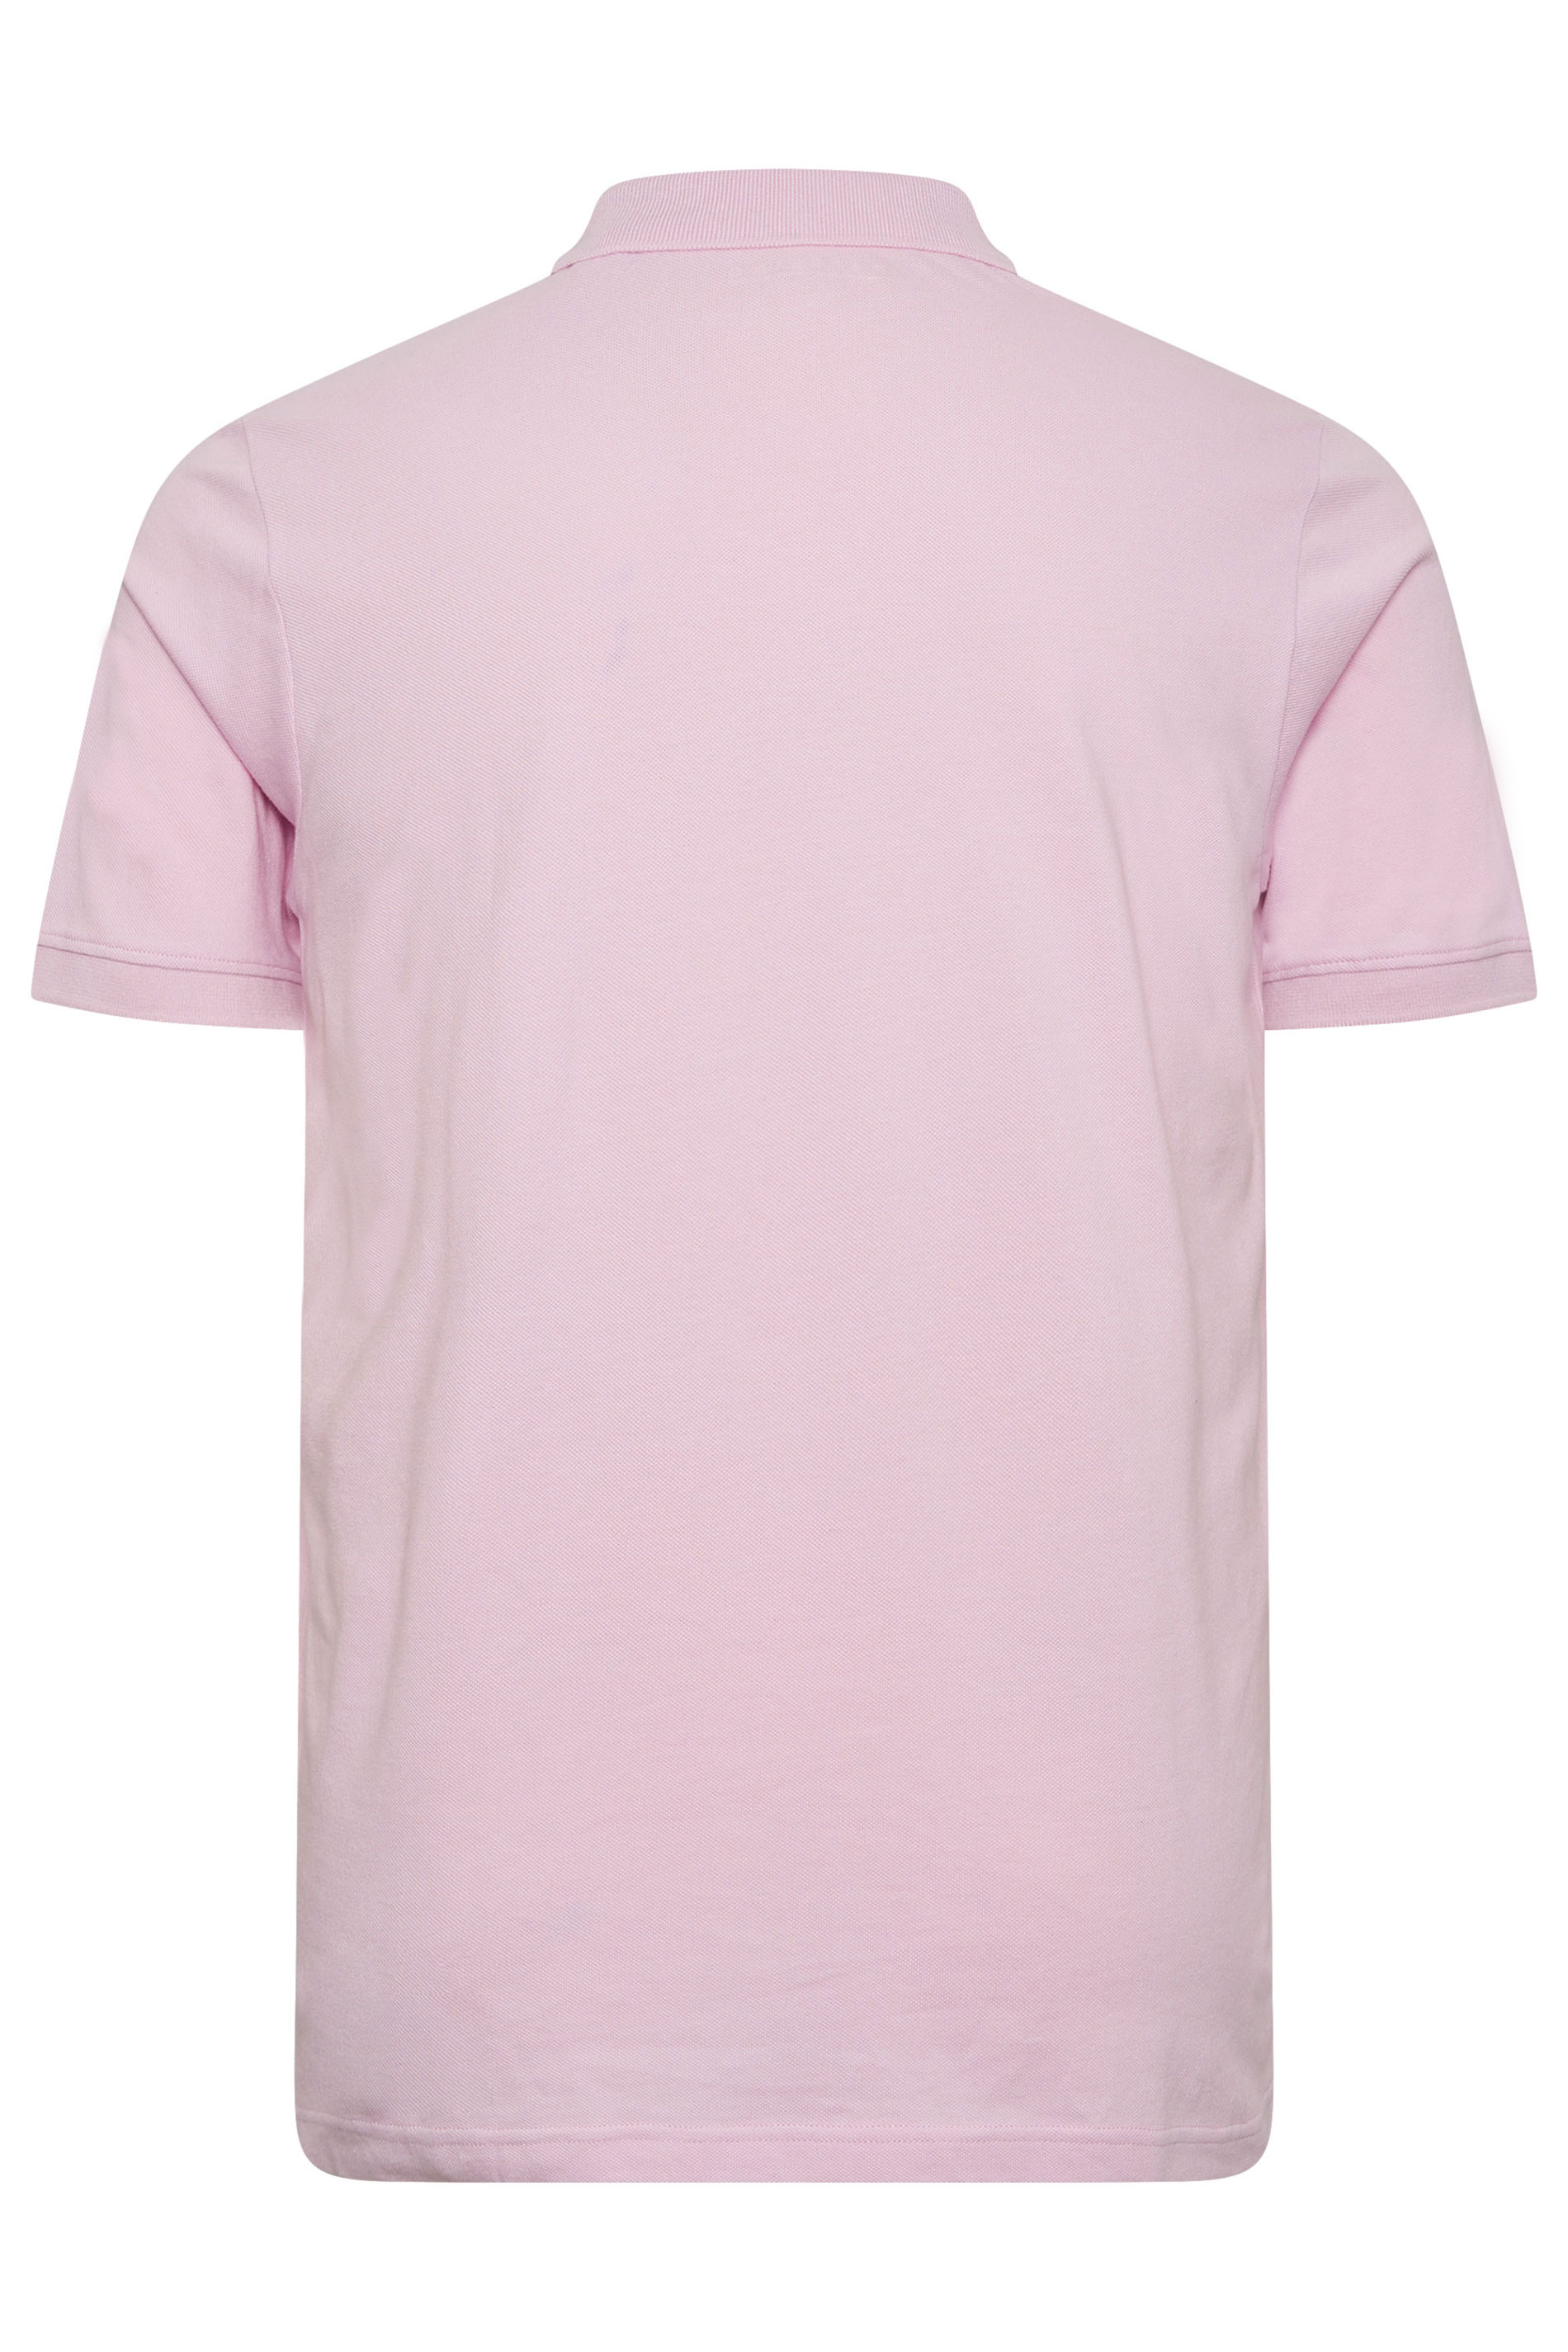 BadRhino Big & Tall Pink Polo Shirt | BadRhino 3